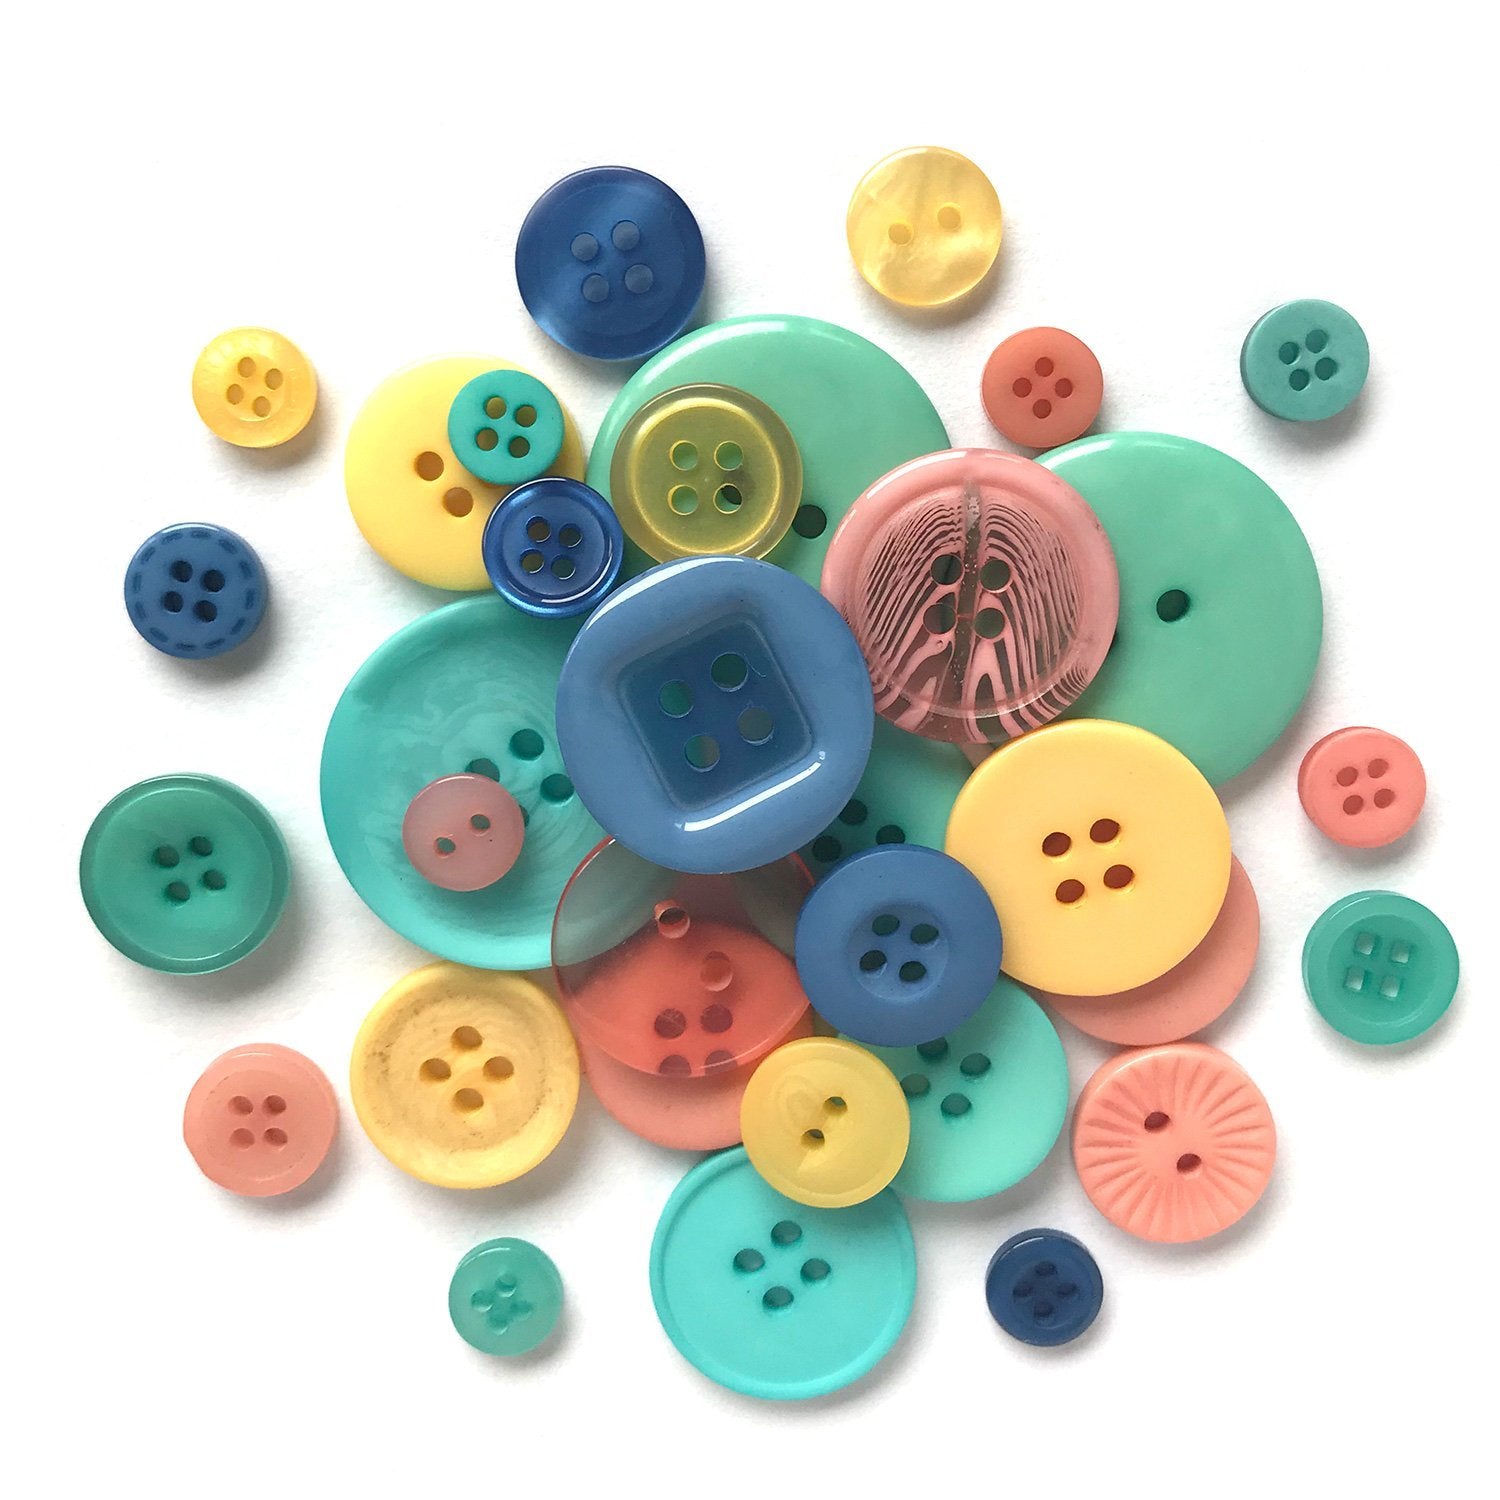 Blur Mix Assorted Buttons Crafts Stock Photo 1098968057